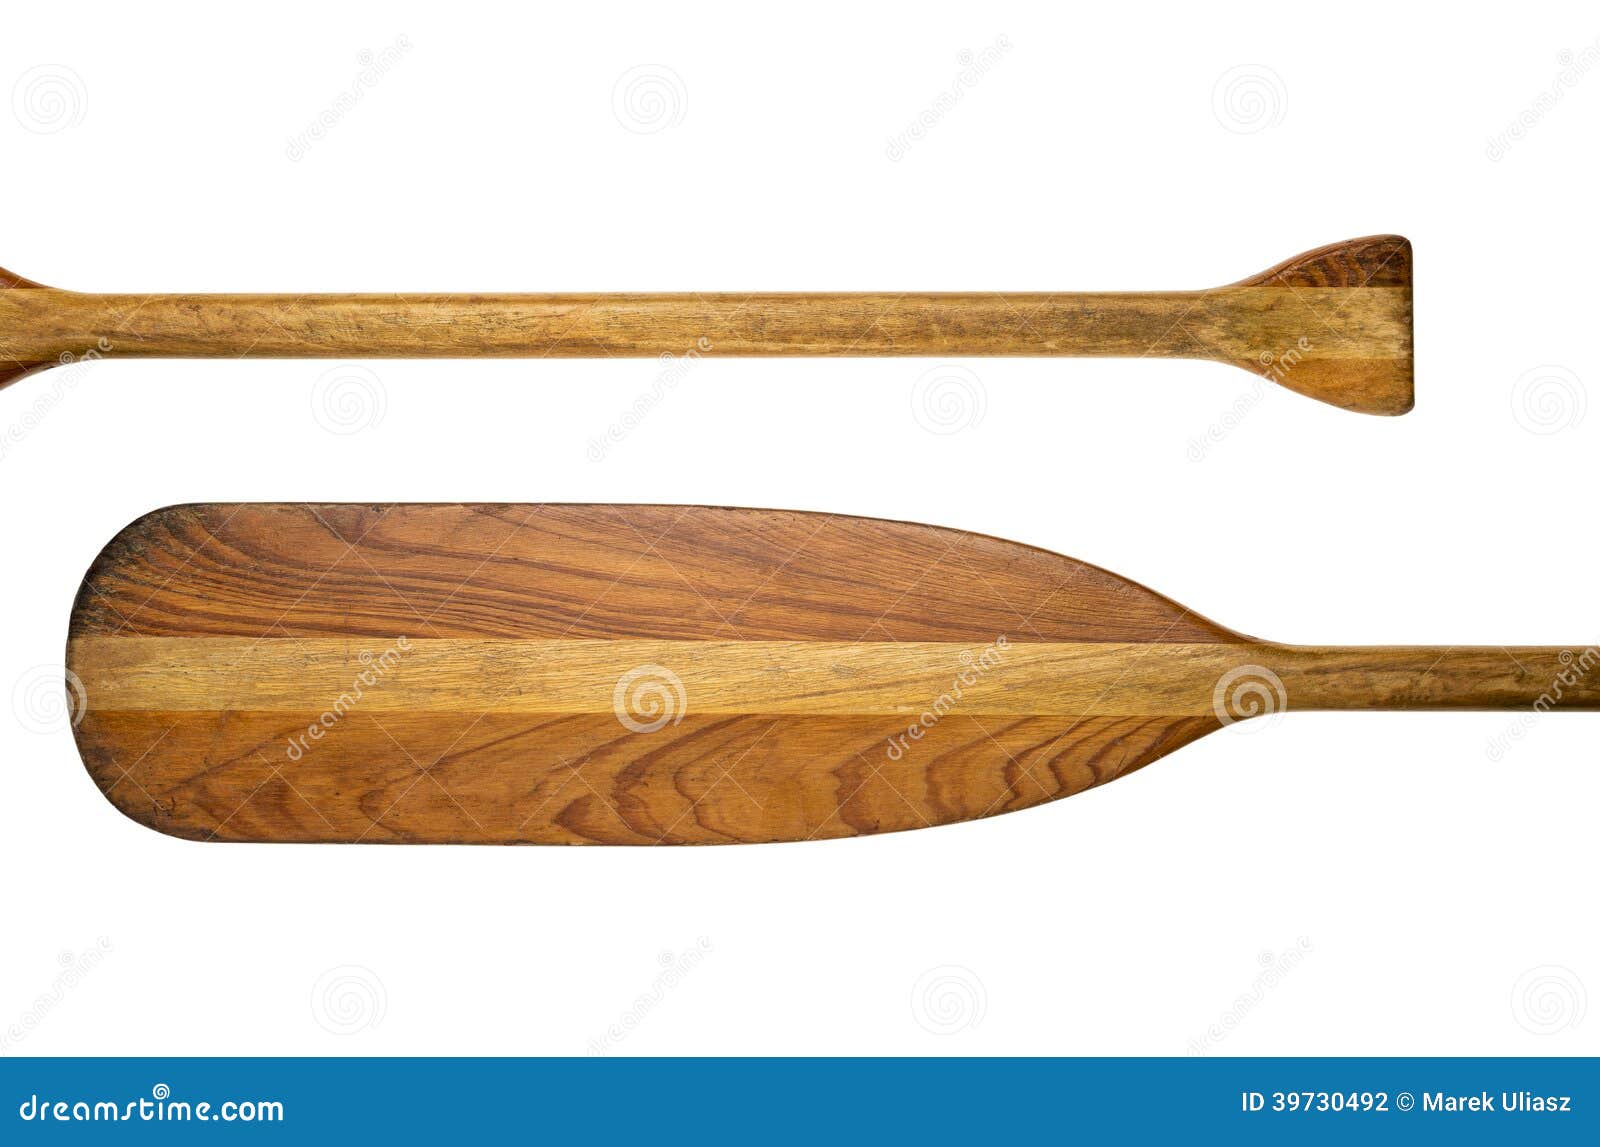 Canoe Paddle Abstract Stock Photo - Image: 39730492